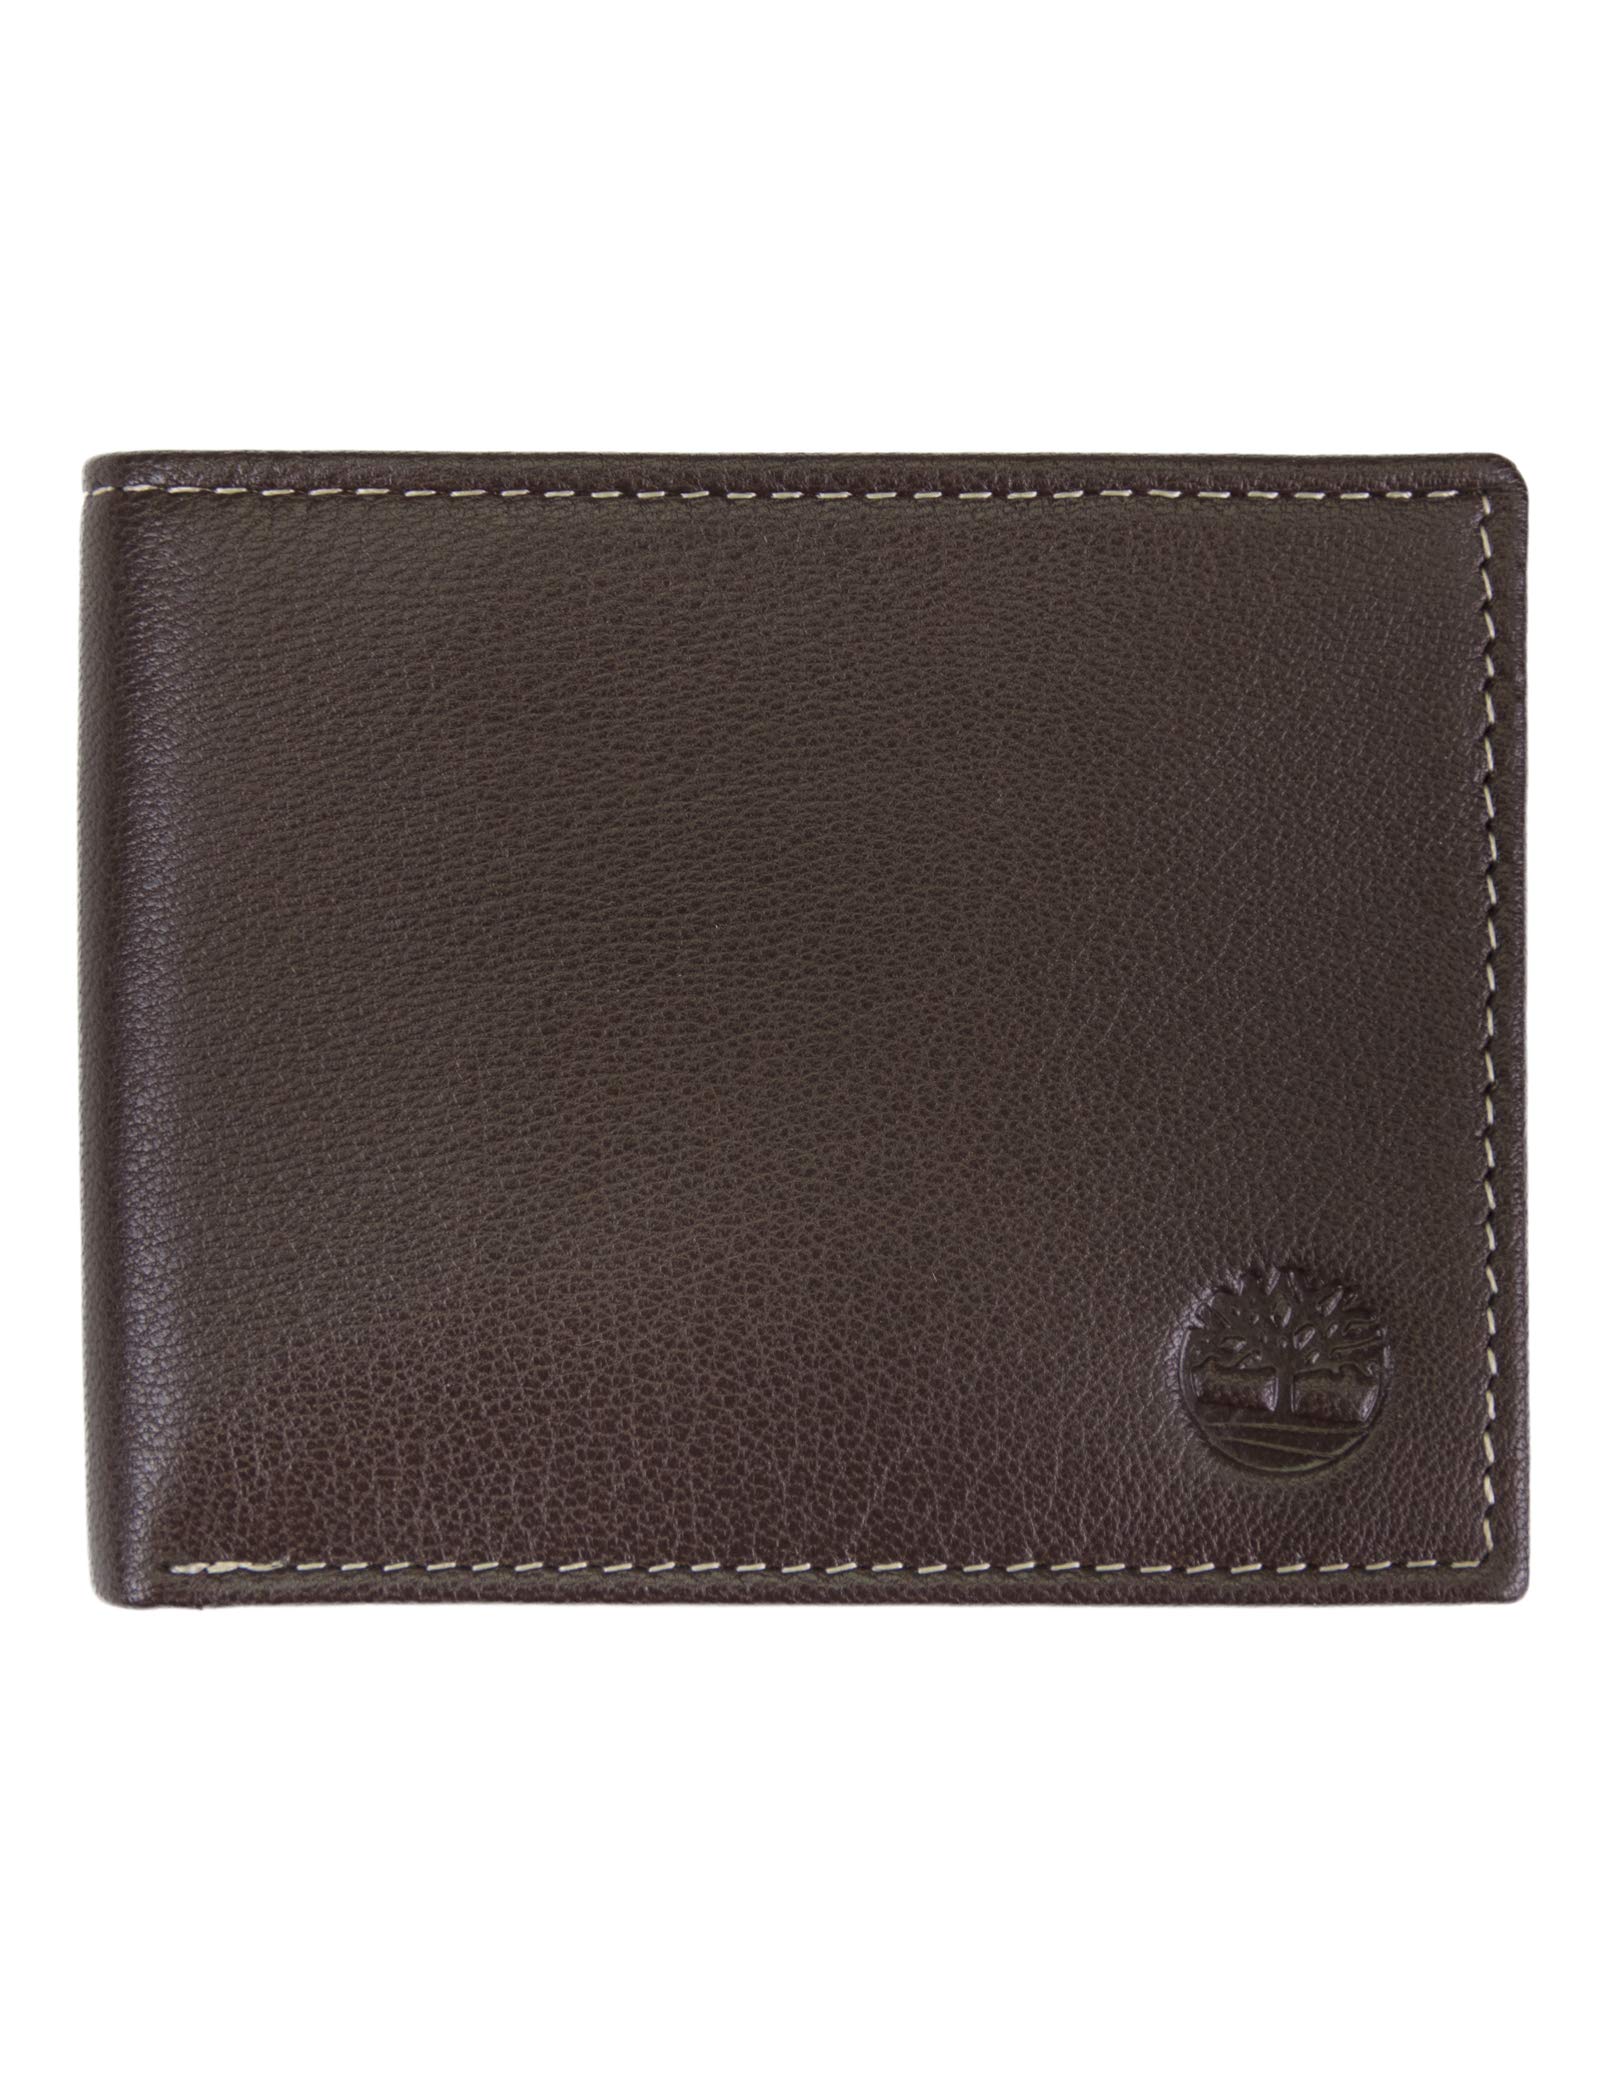 Timberland Men's Leather Wallet Wallet Black, multicolor